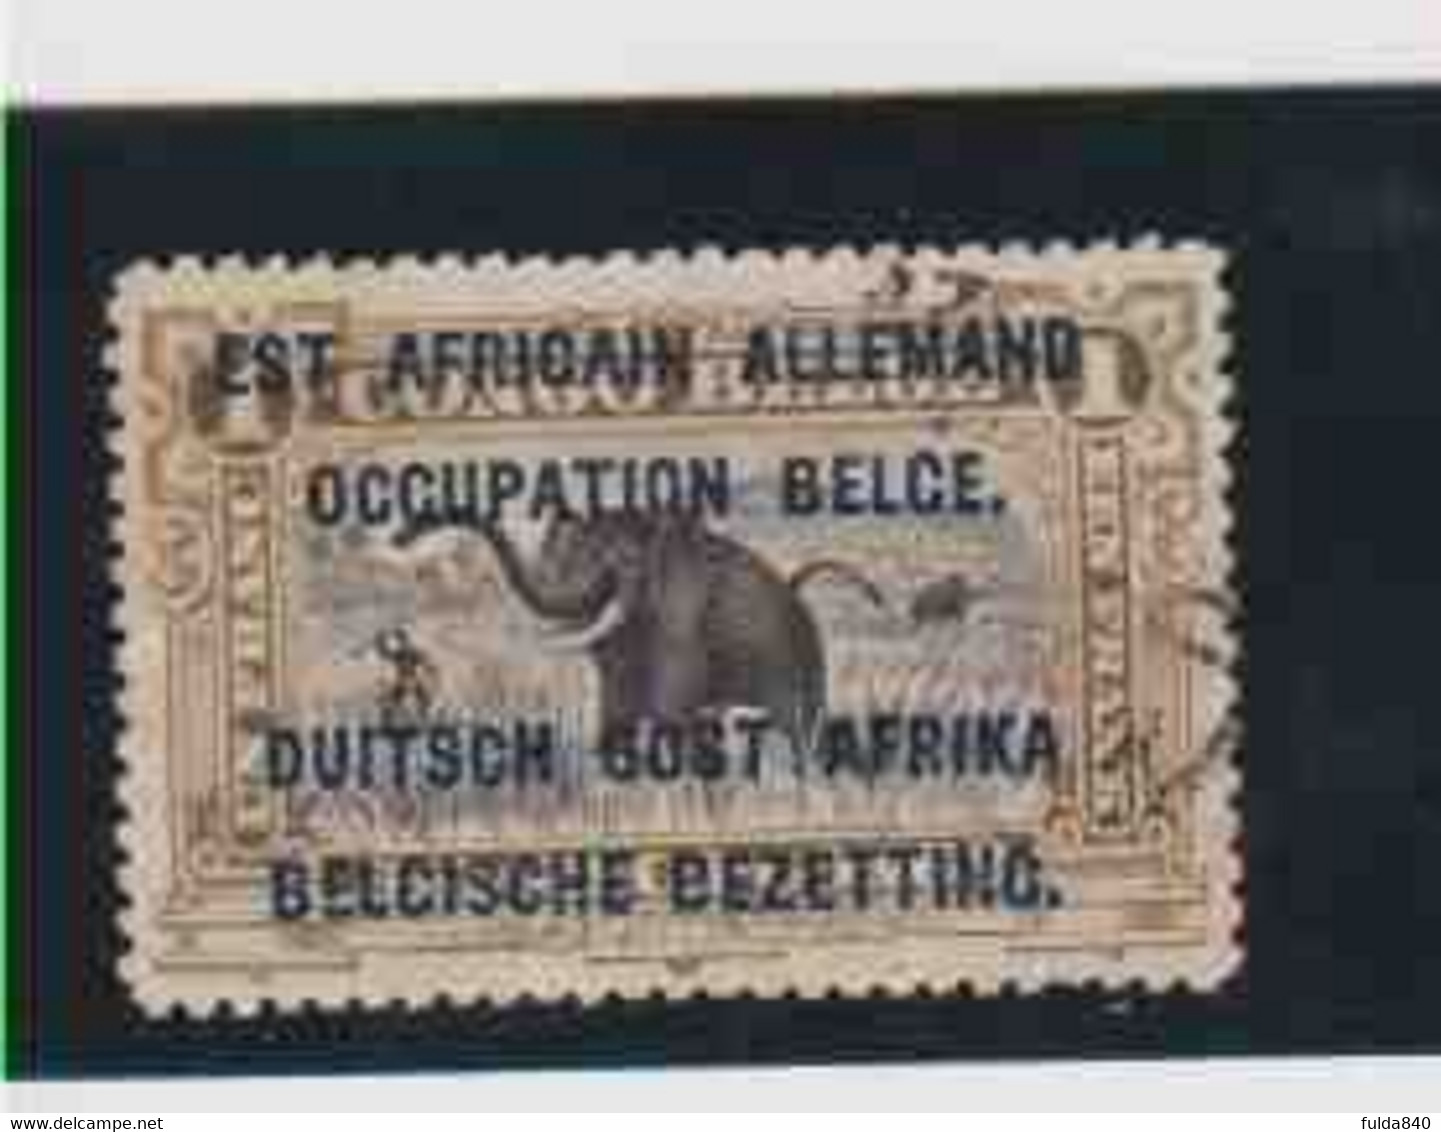 RUANDA-URUNDI. (OBP-COB) 1916 - N°34  *Est Africain Allemand, Occupation Belge*   1F.  Obli  () - Used Stamps